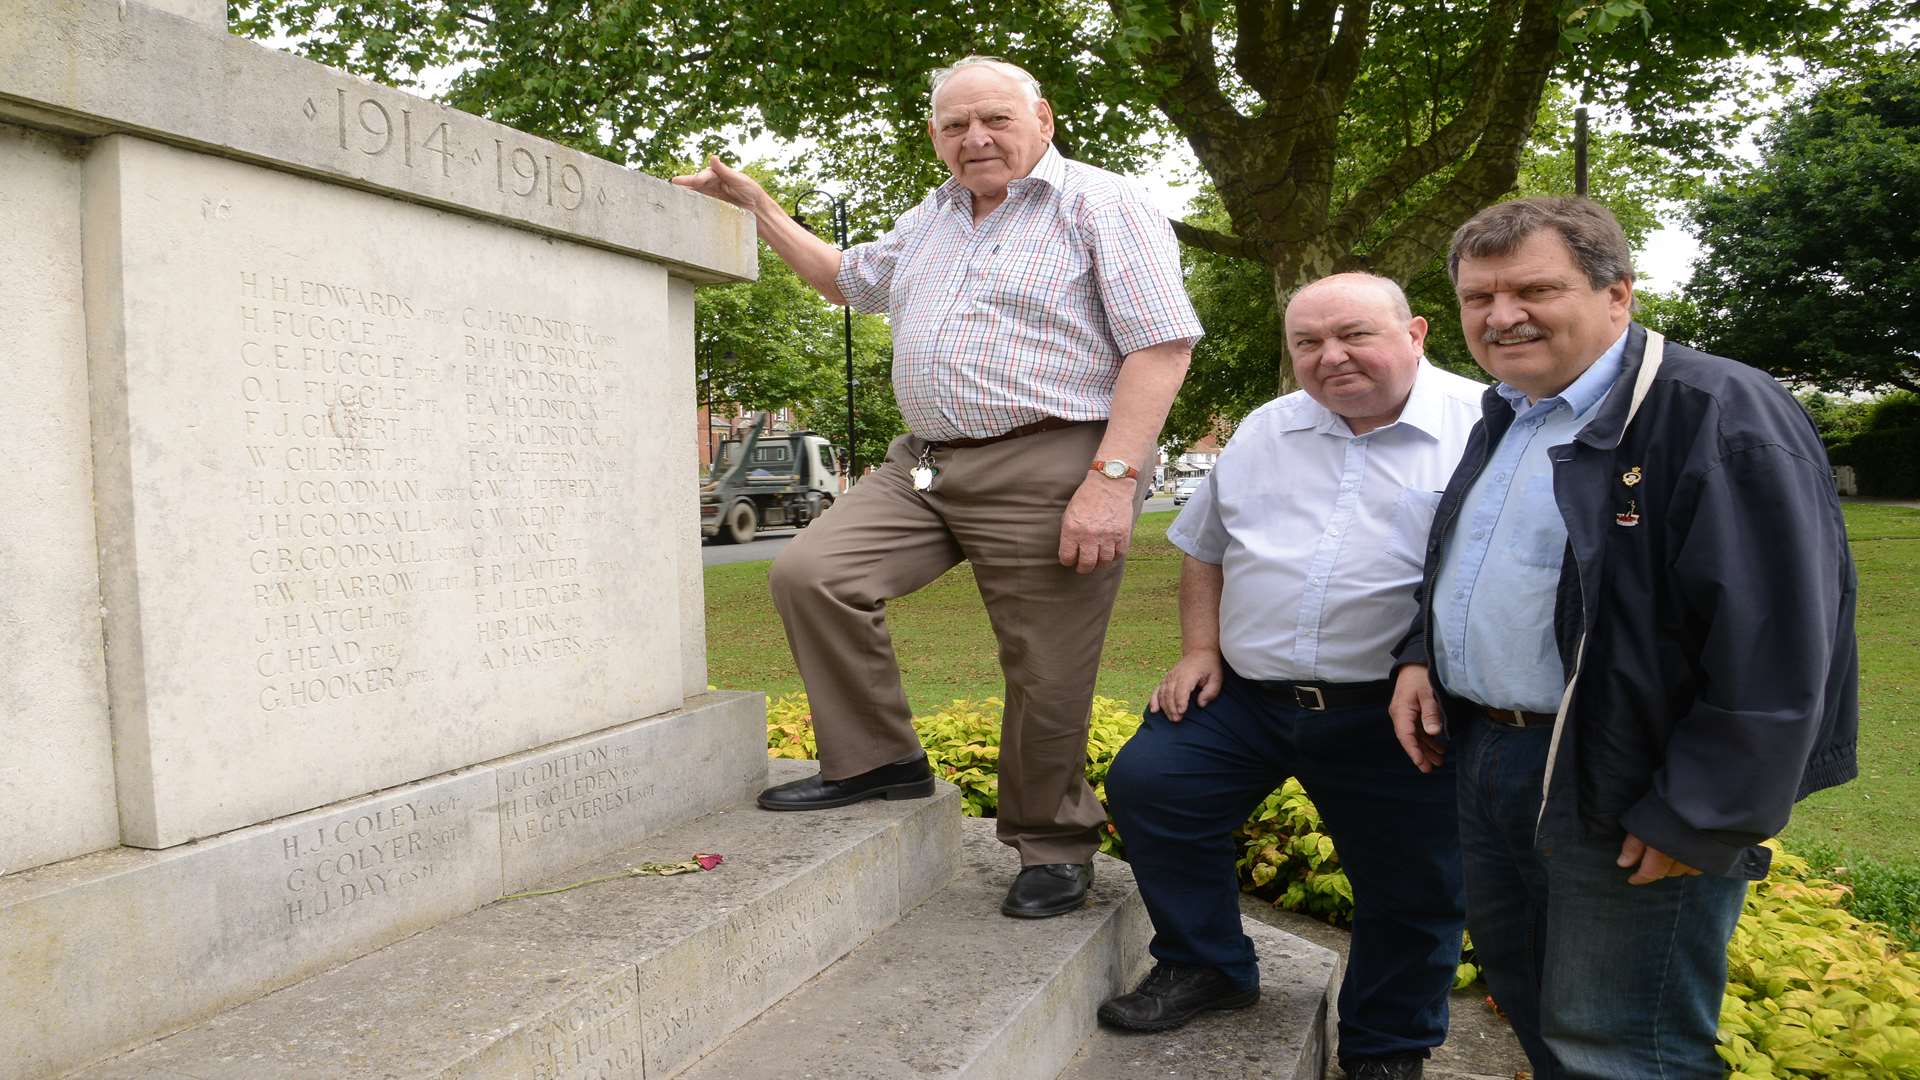 Royal British Legion members, Stanley Goodsall, Neil Beaven and Bill Chantler at Tenterden War Memorial